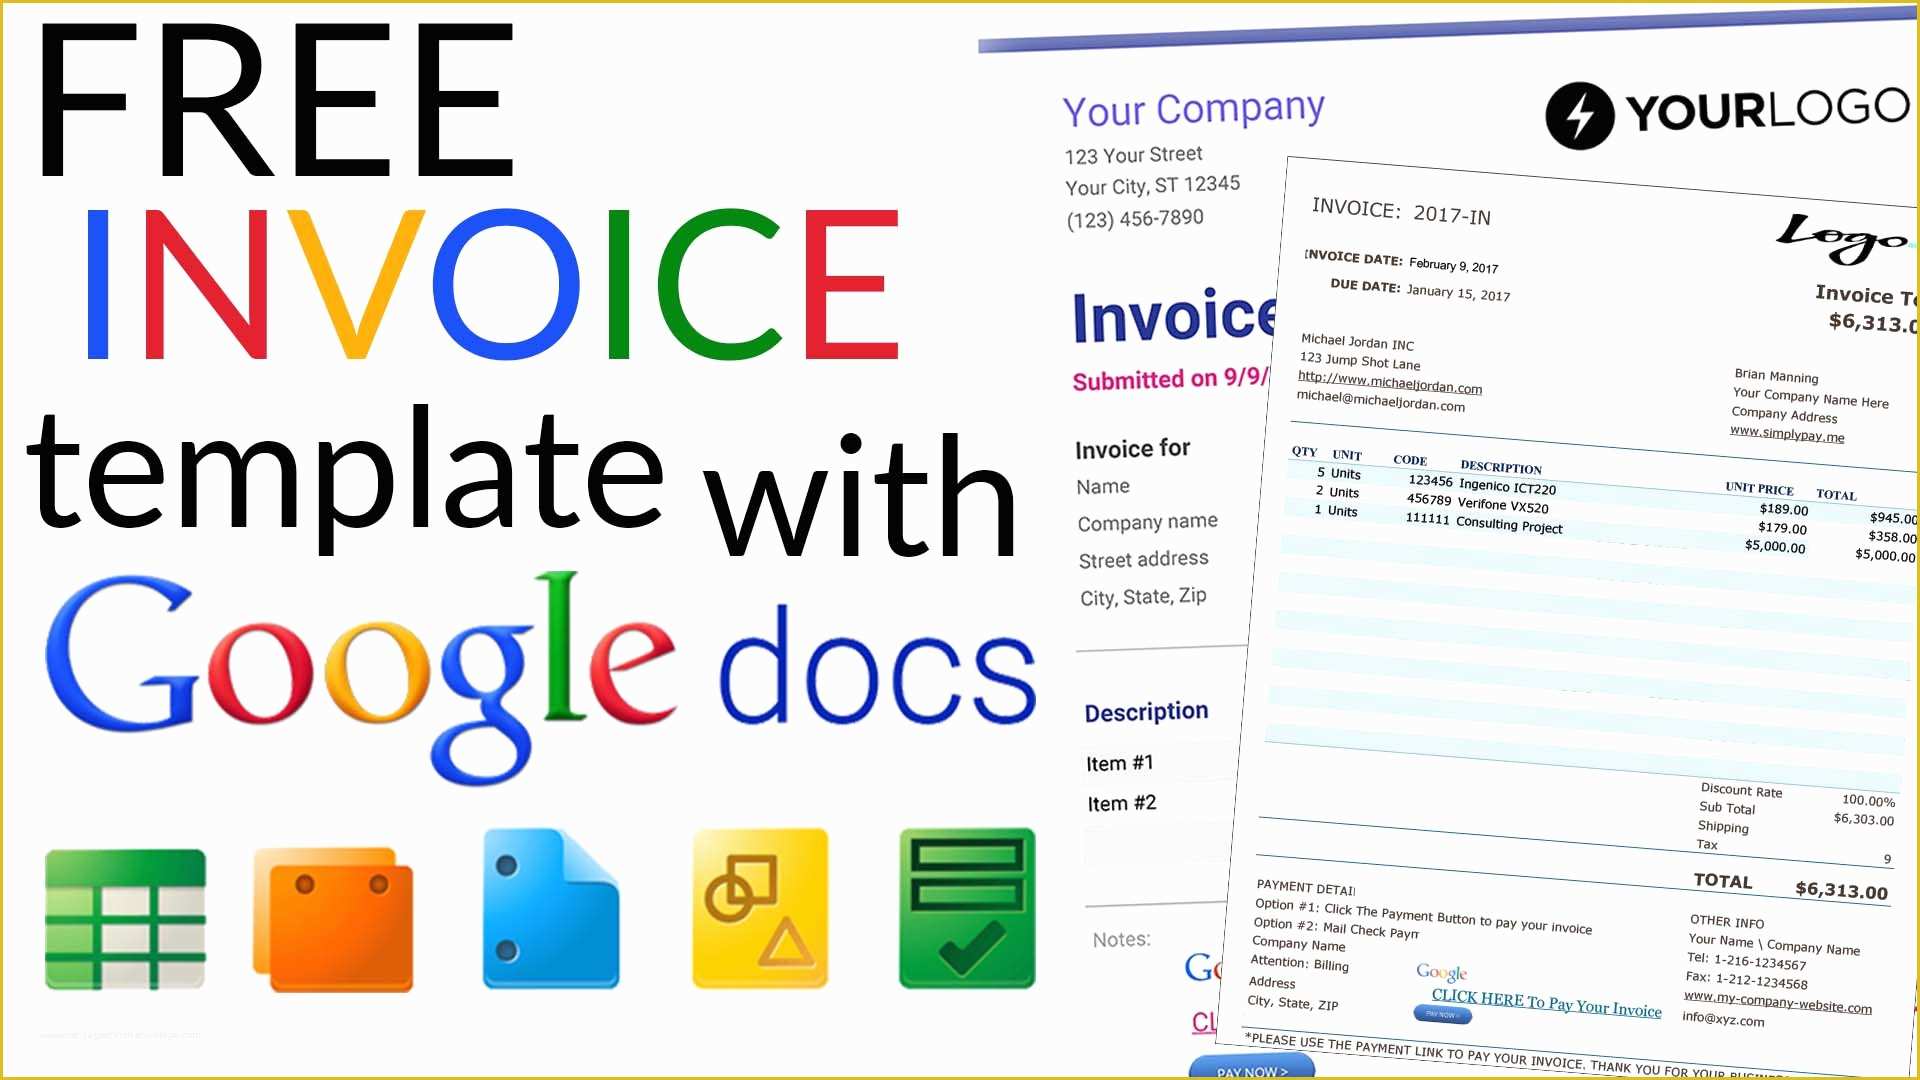 Free Invoice Template Google Docs Of Free Invoice Templates with Google Docs